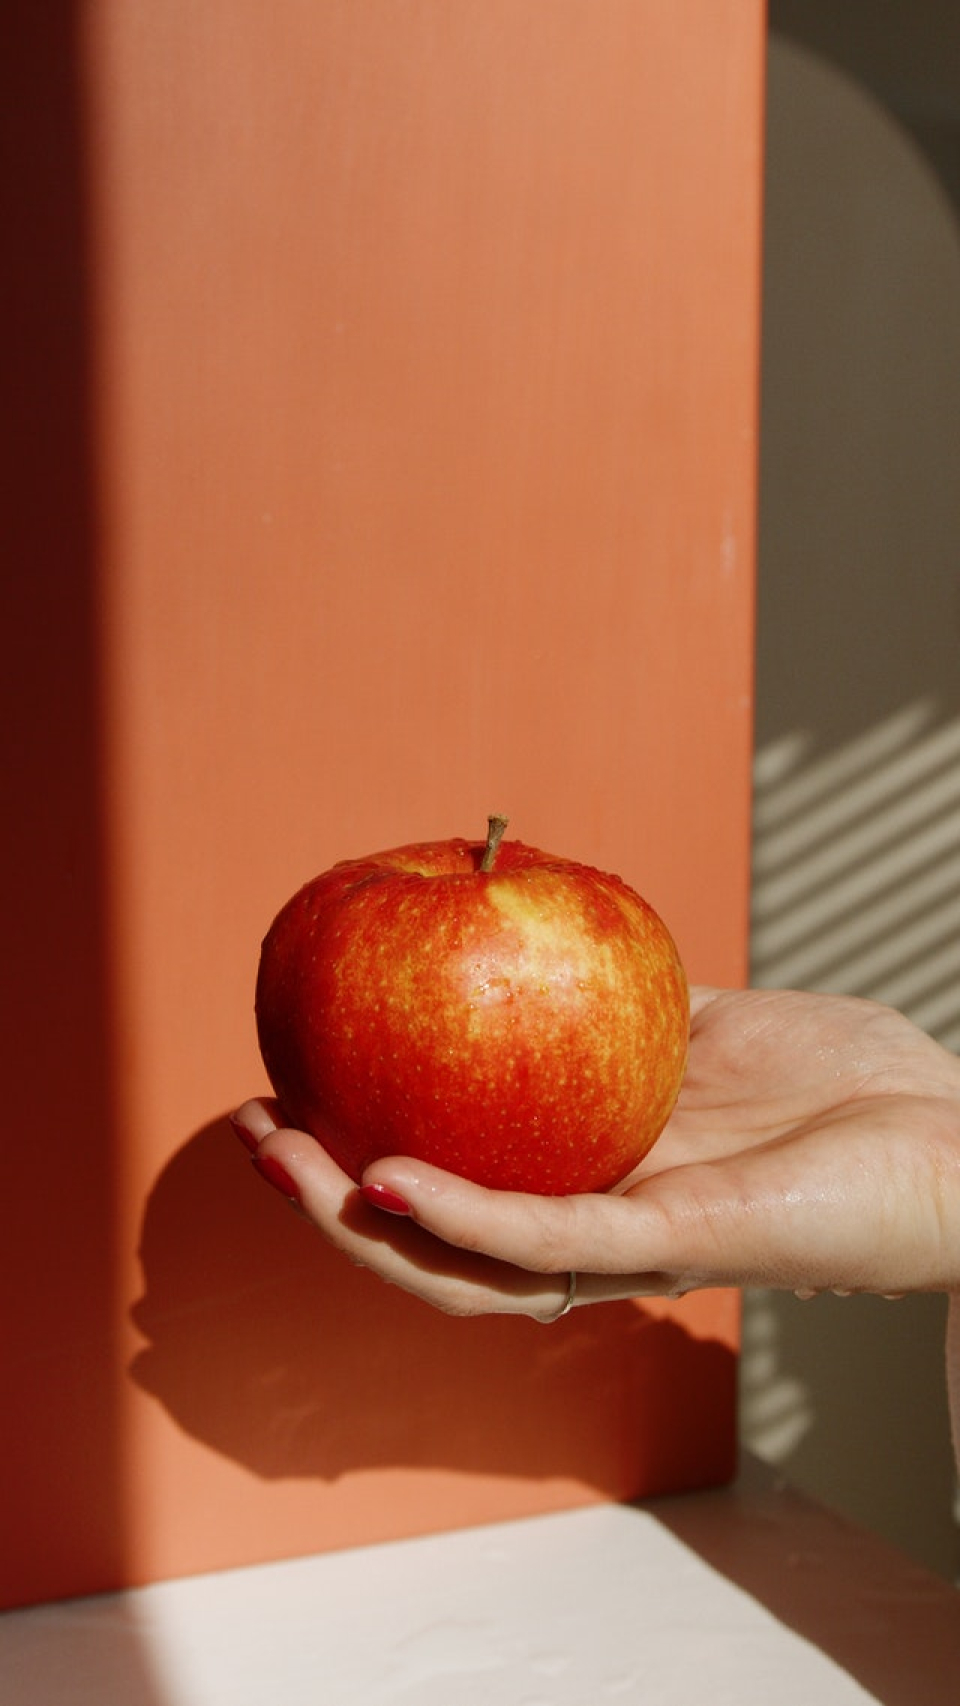 Mărul este benefic pentru sănătate     Photo by Anna Nekrashevich from Pexels